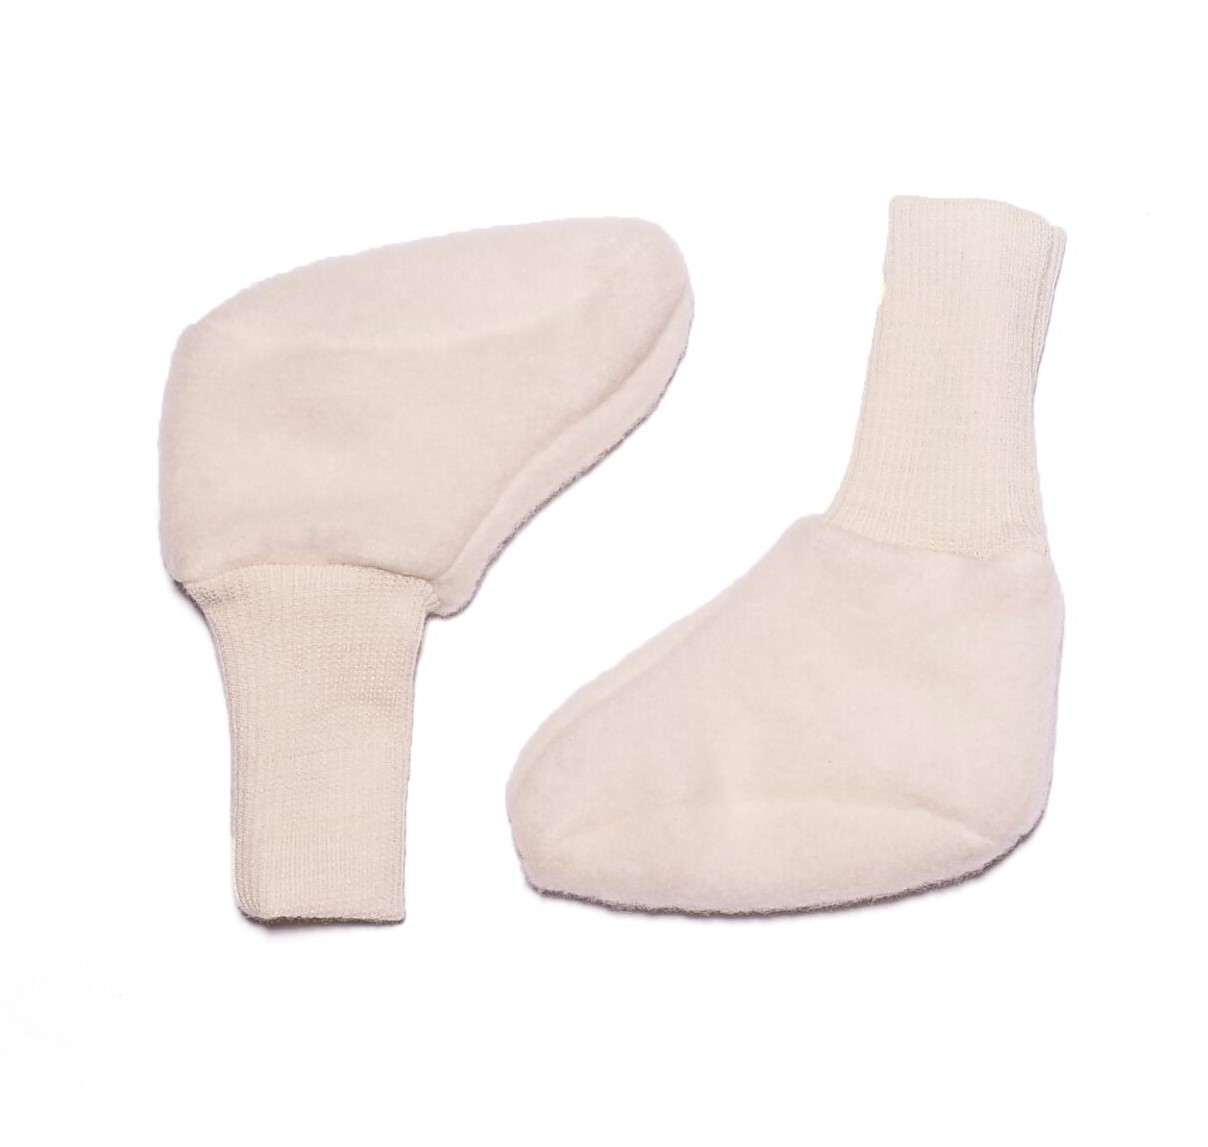 Cosilana Baby-Schuhe aus Woll-/Baumwollfleece